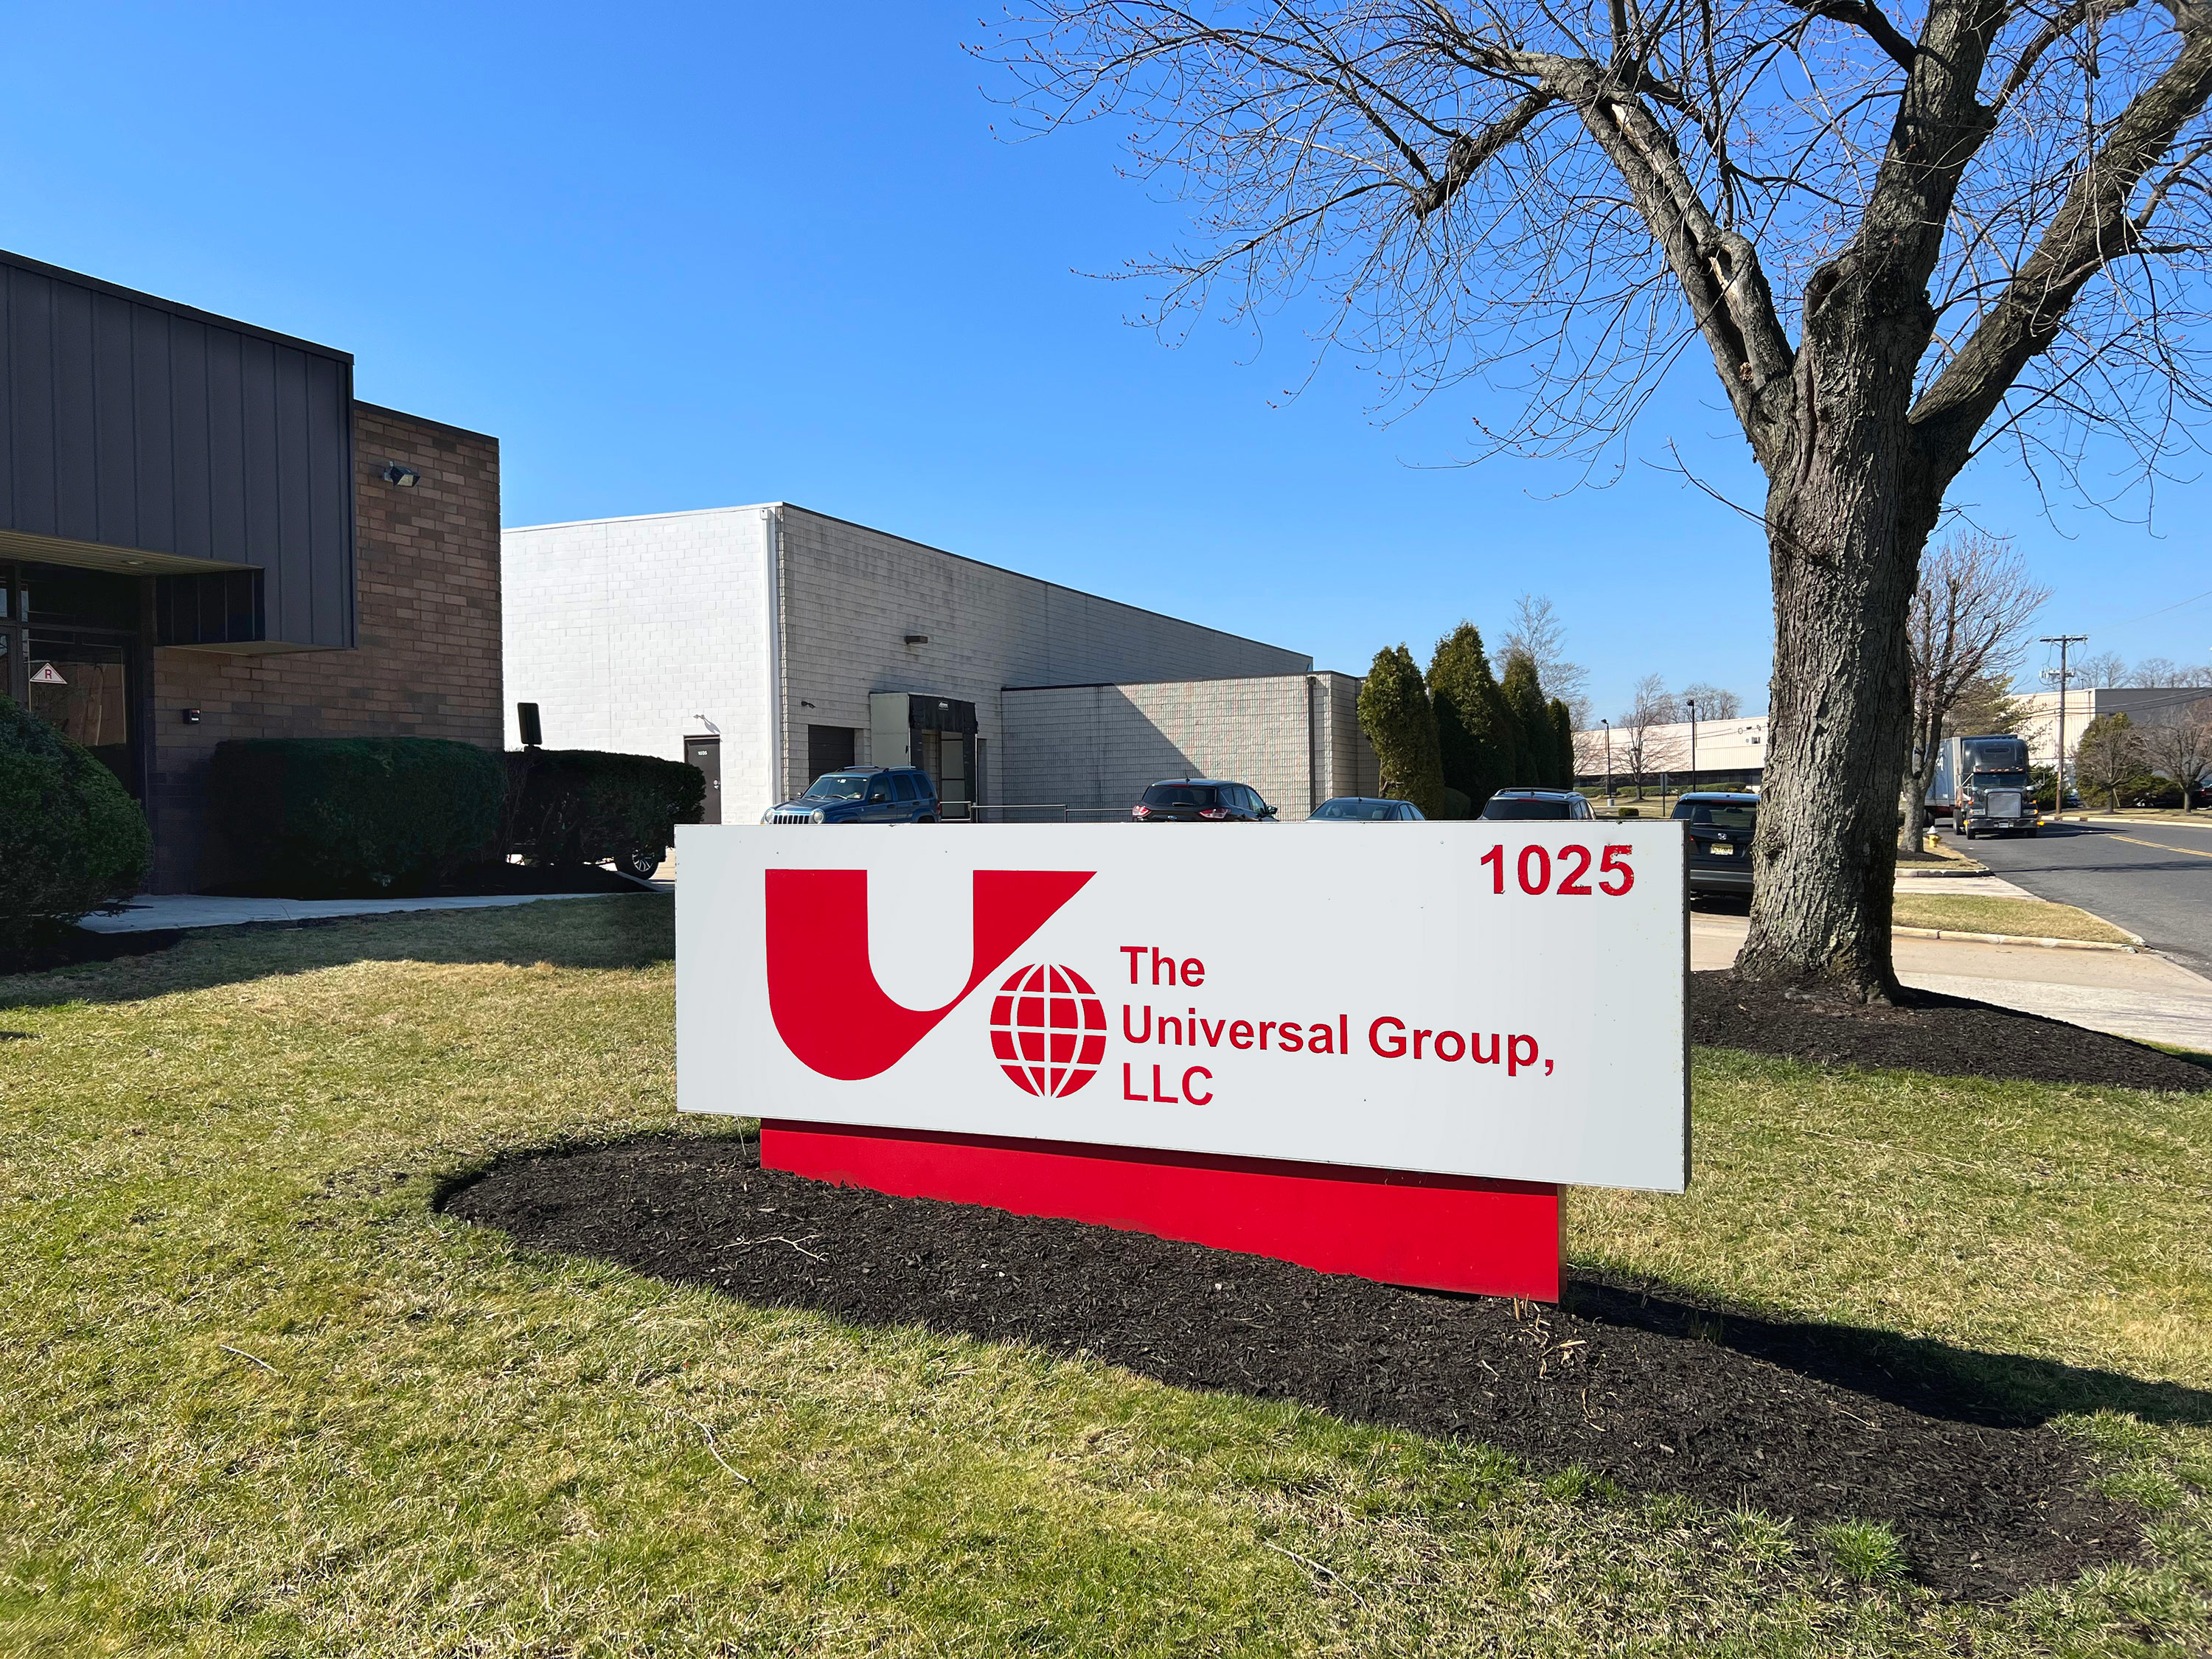 The Universal Group, LLC exterior view in Pennsauken NJ